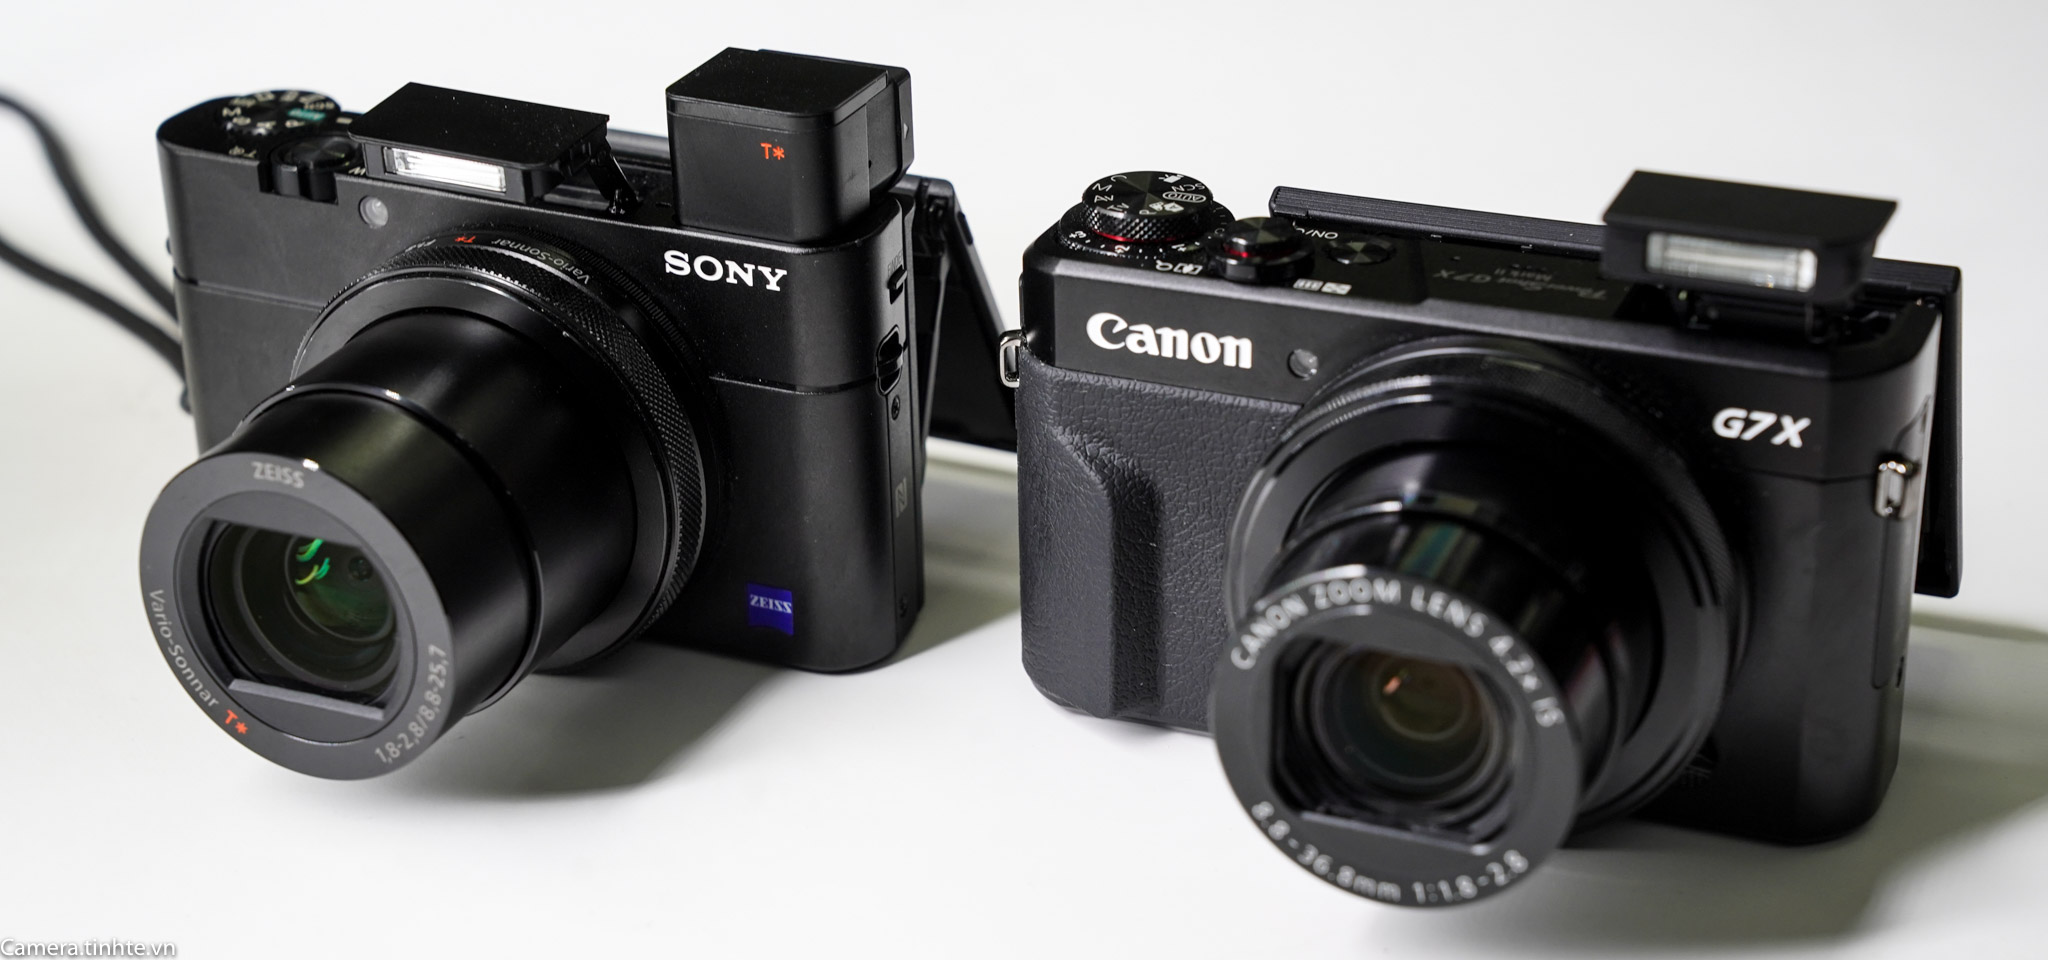 SOny RX100V vs Canon G7X II - Camera.tinhte.vn -1.jpg